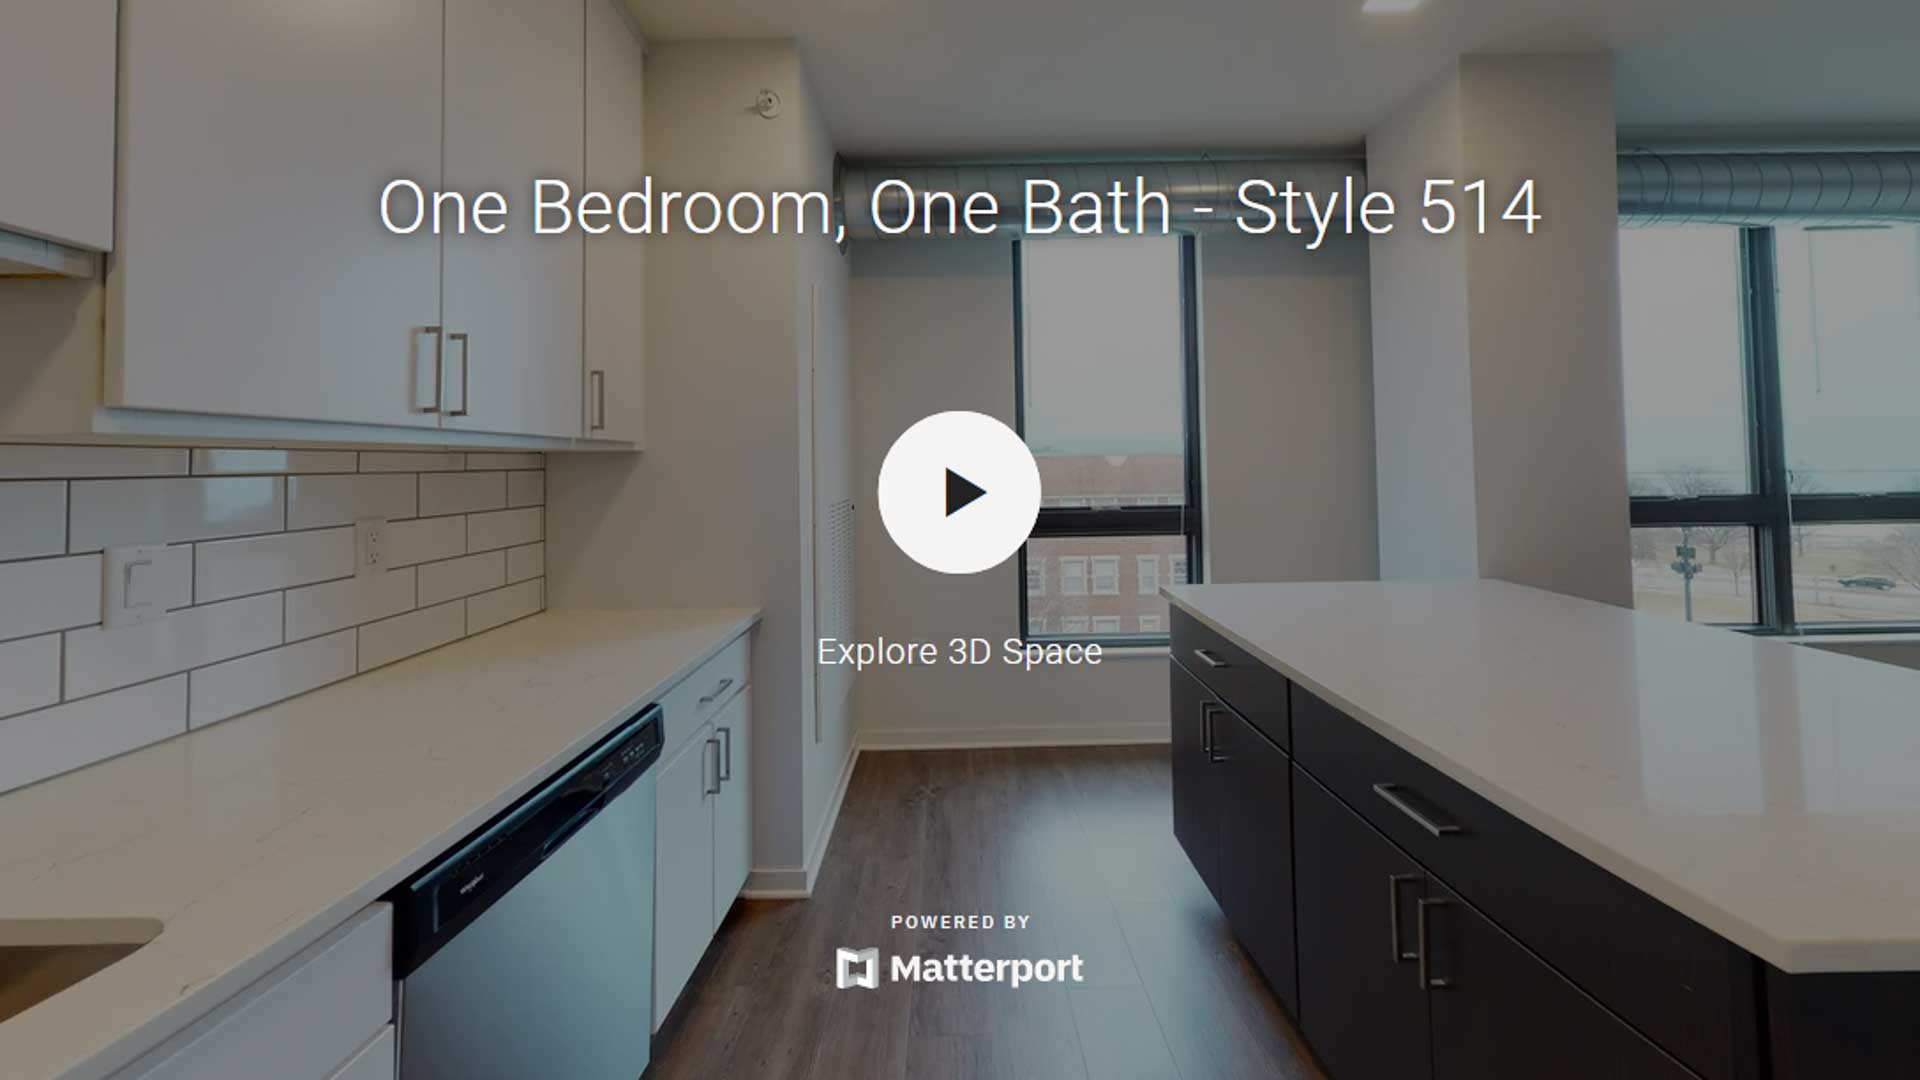 One Bedroom, One Bath - Style 514